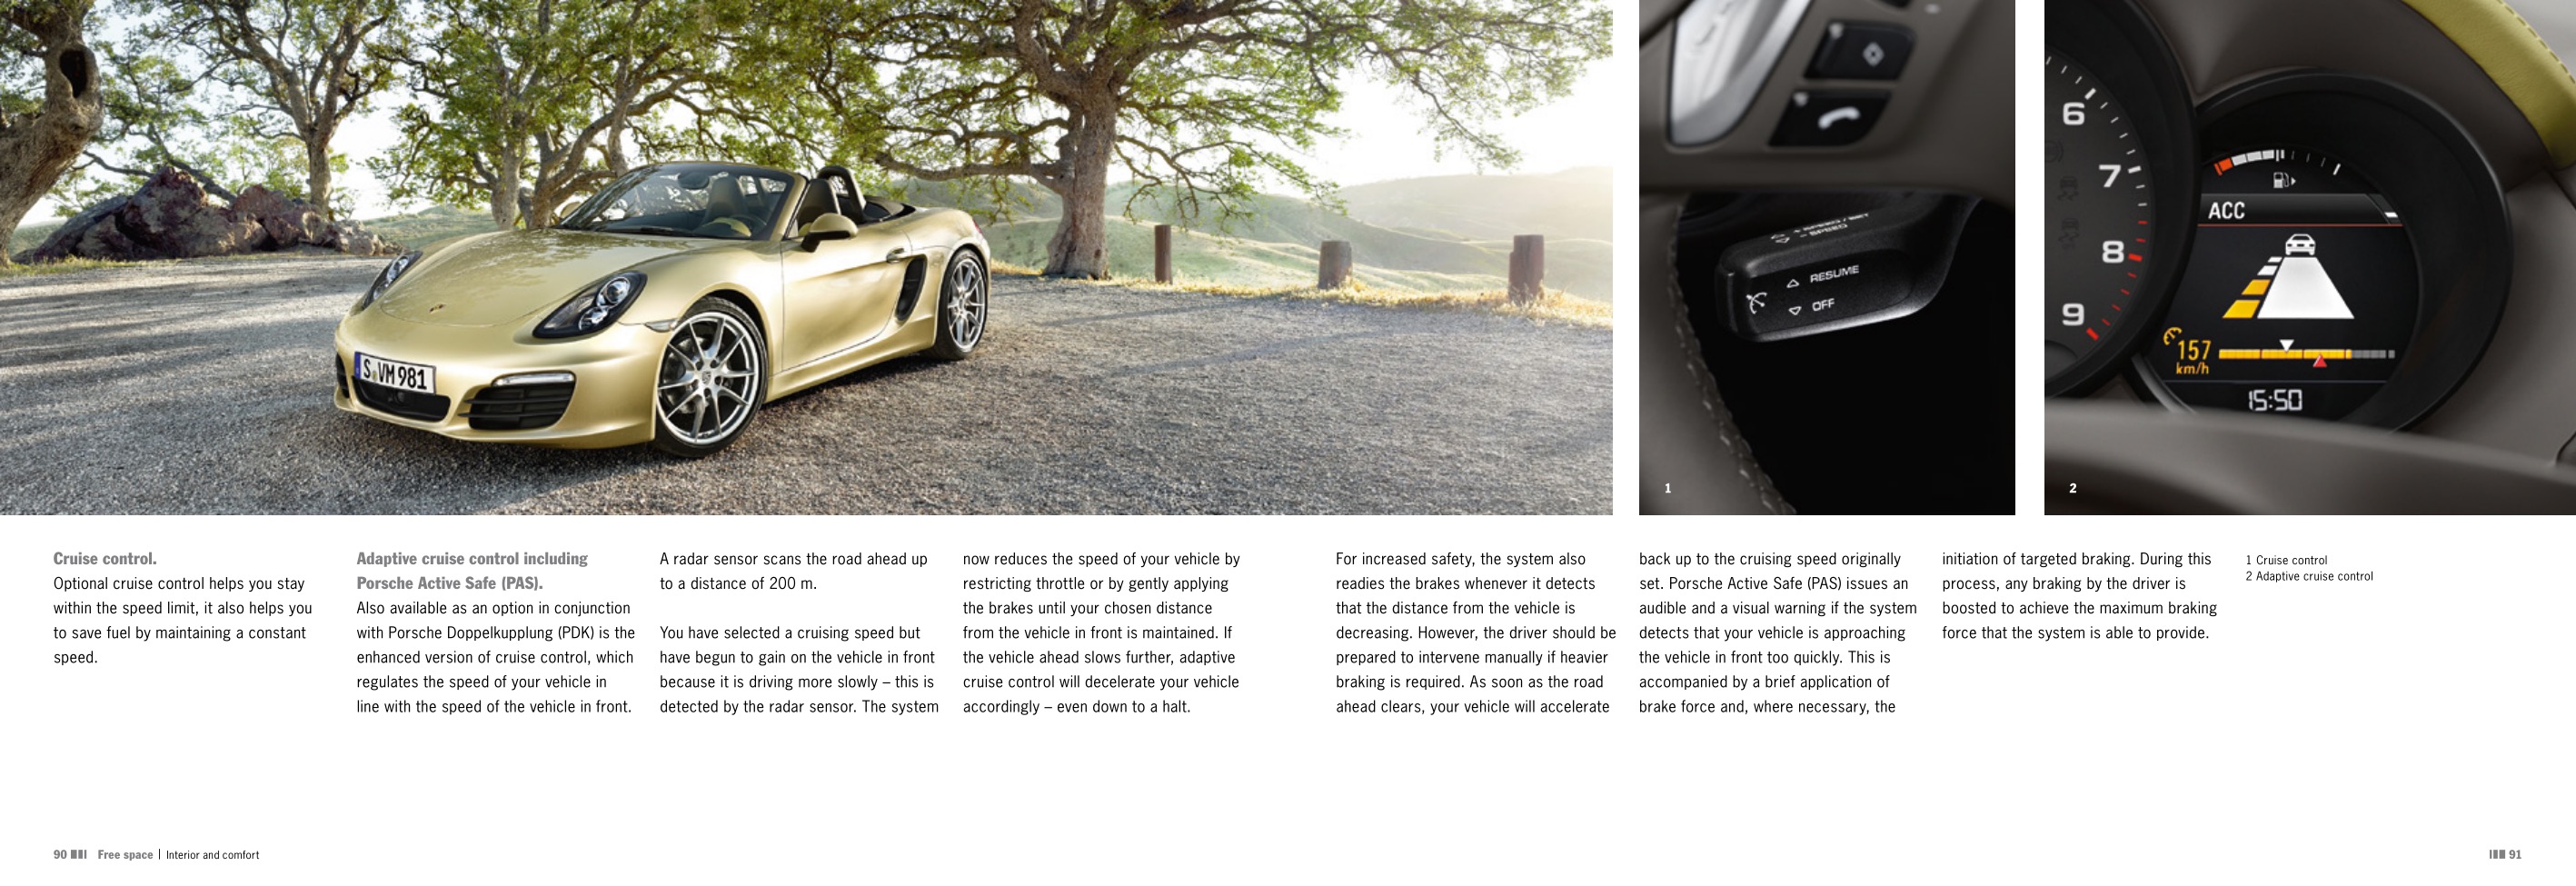 2015 Porsche Boxster Brochure Page 34